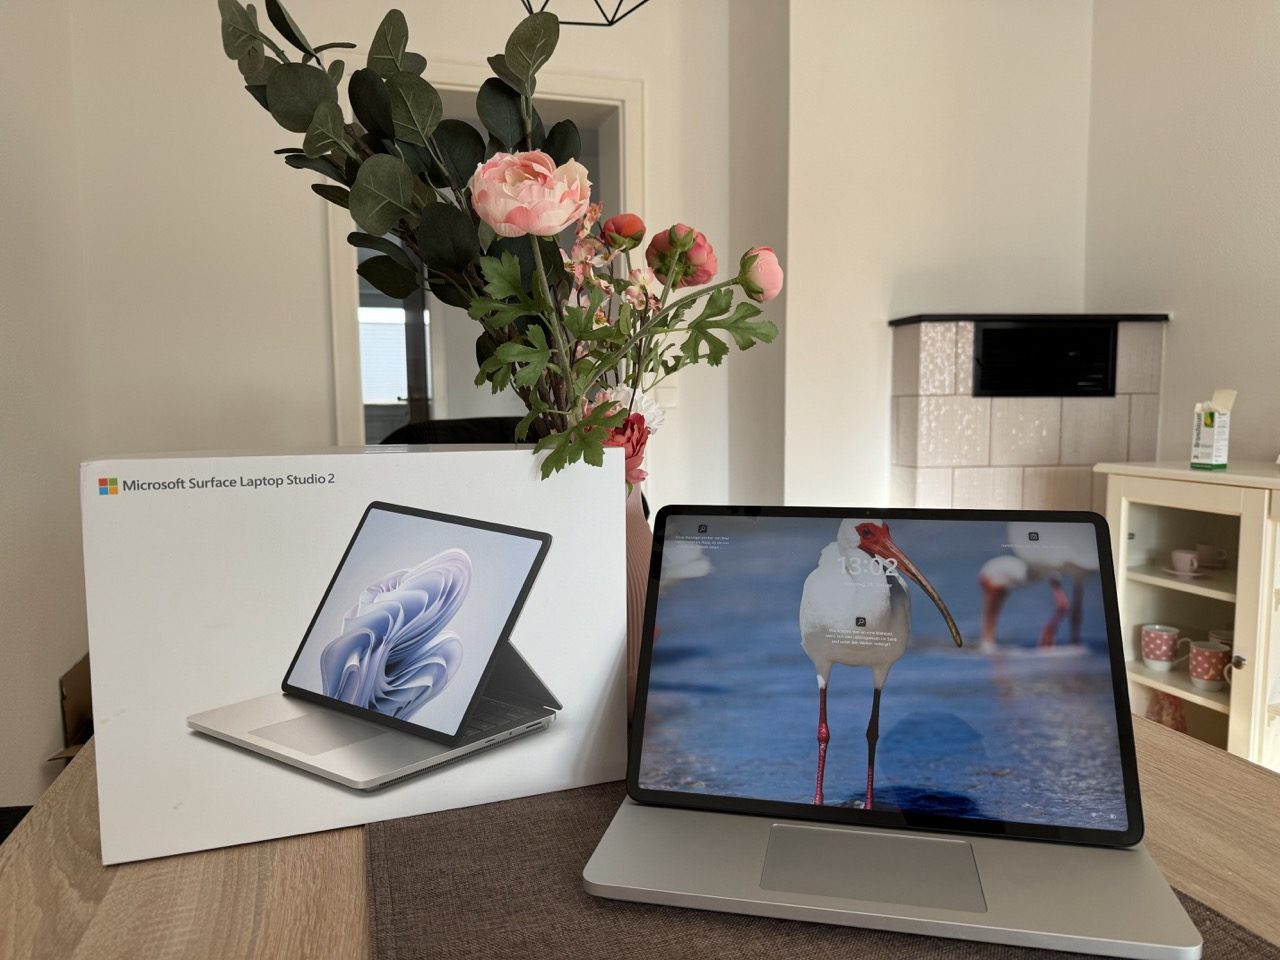 Microsoft Surface Laptop Studio 2 cover image